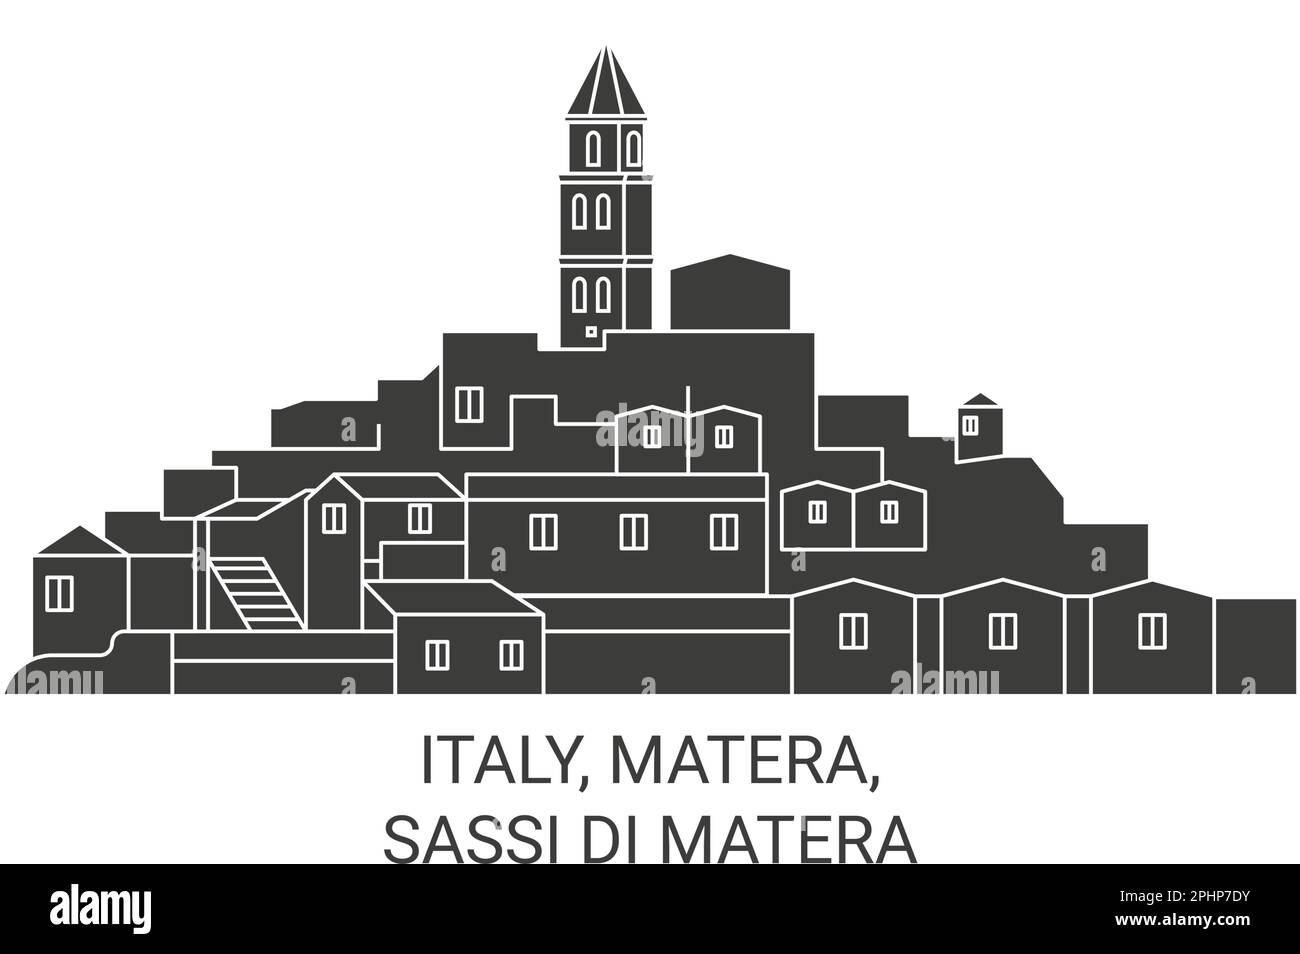 Italien, Matera, Sassi Di Matera Reise Landmark Vector Illustration Stock Vektor